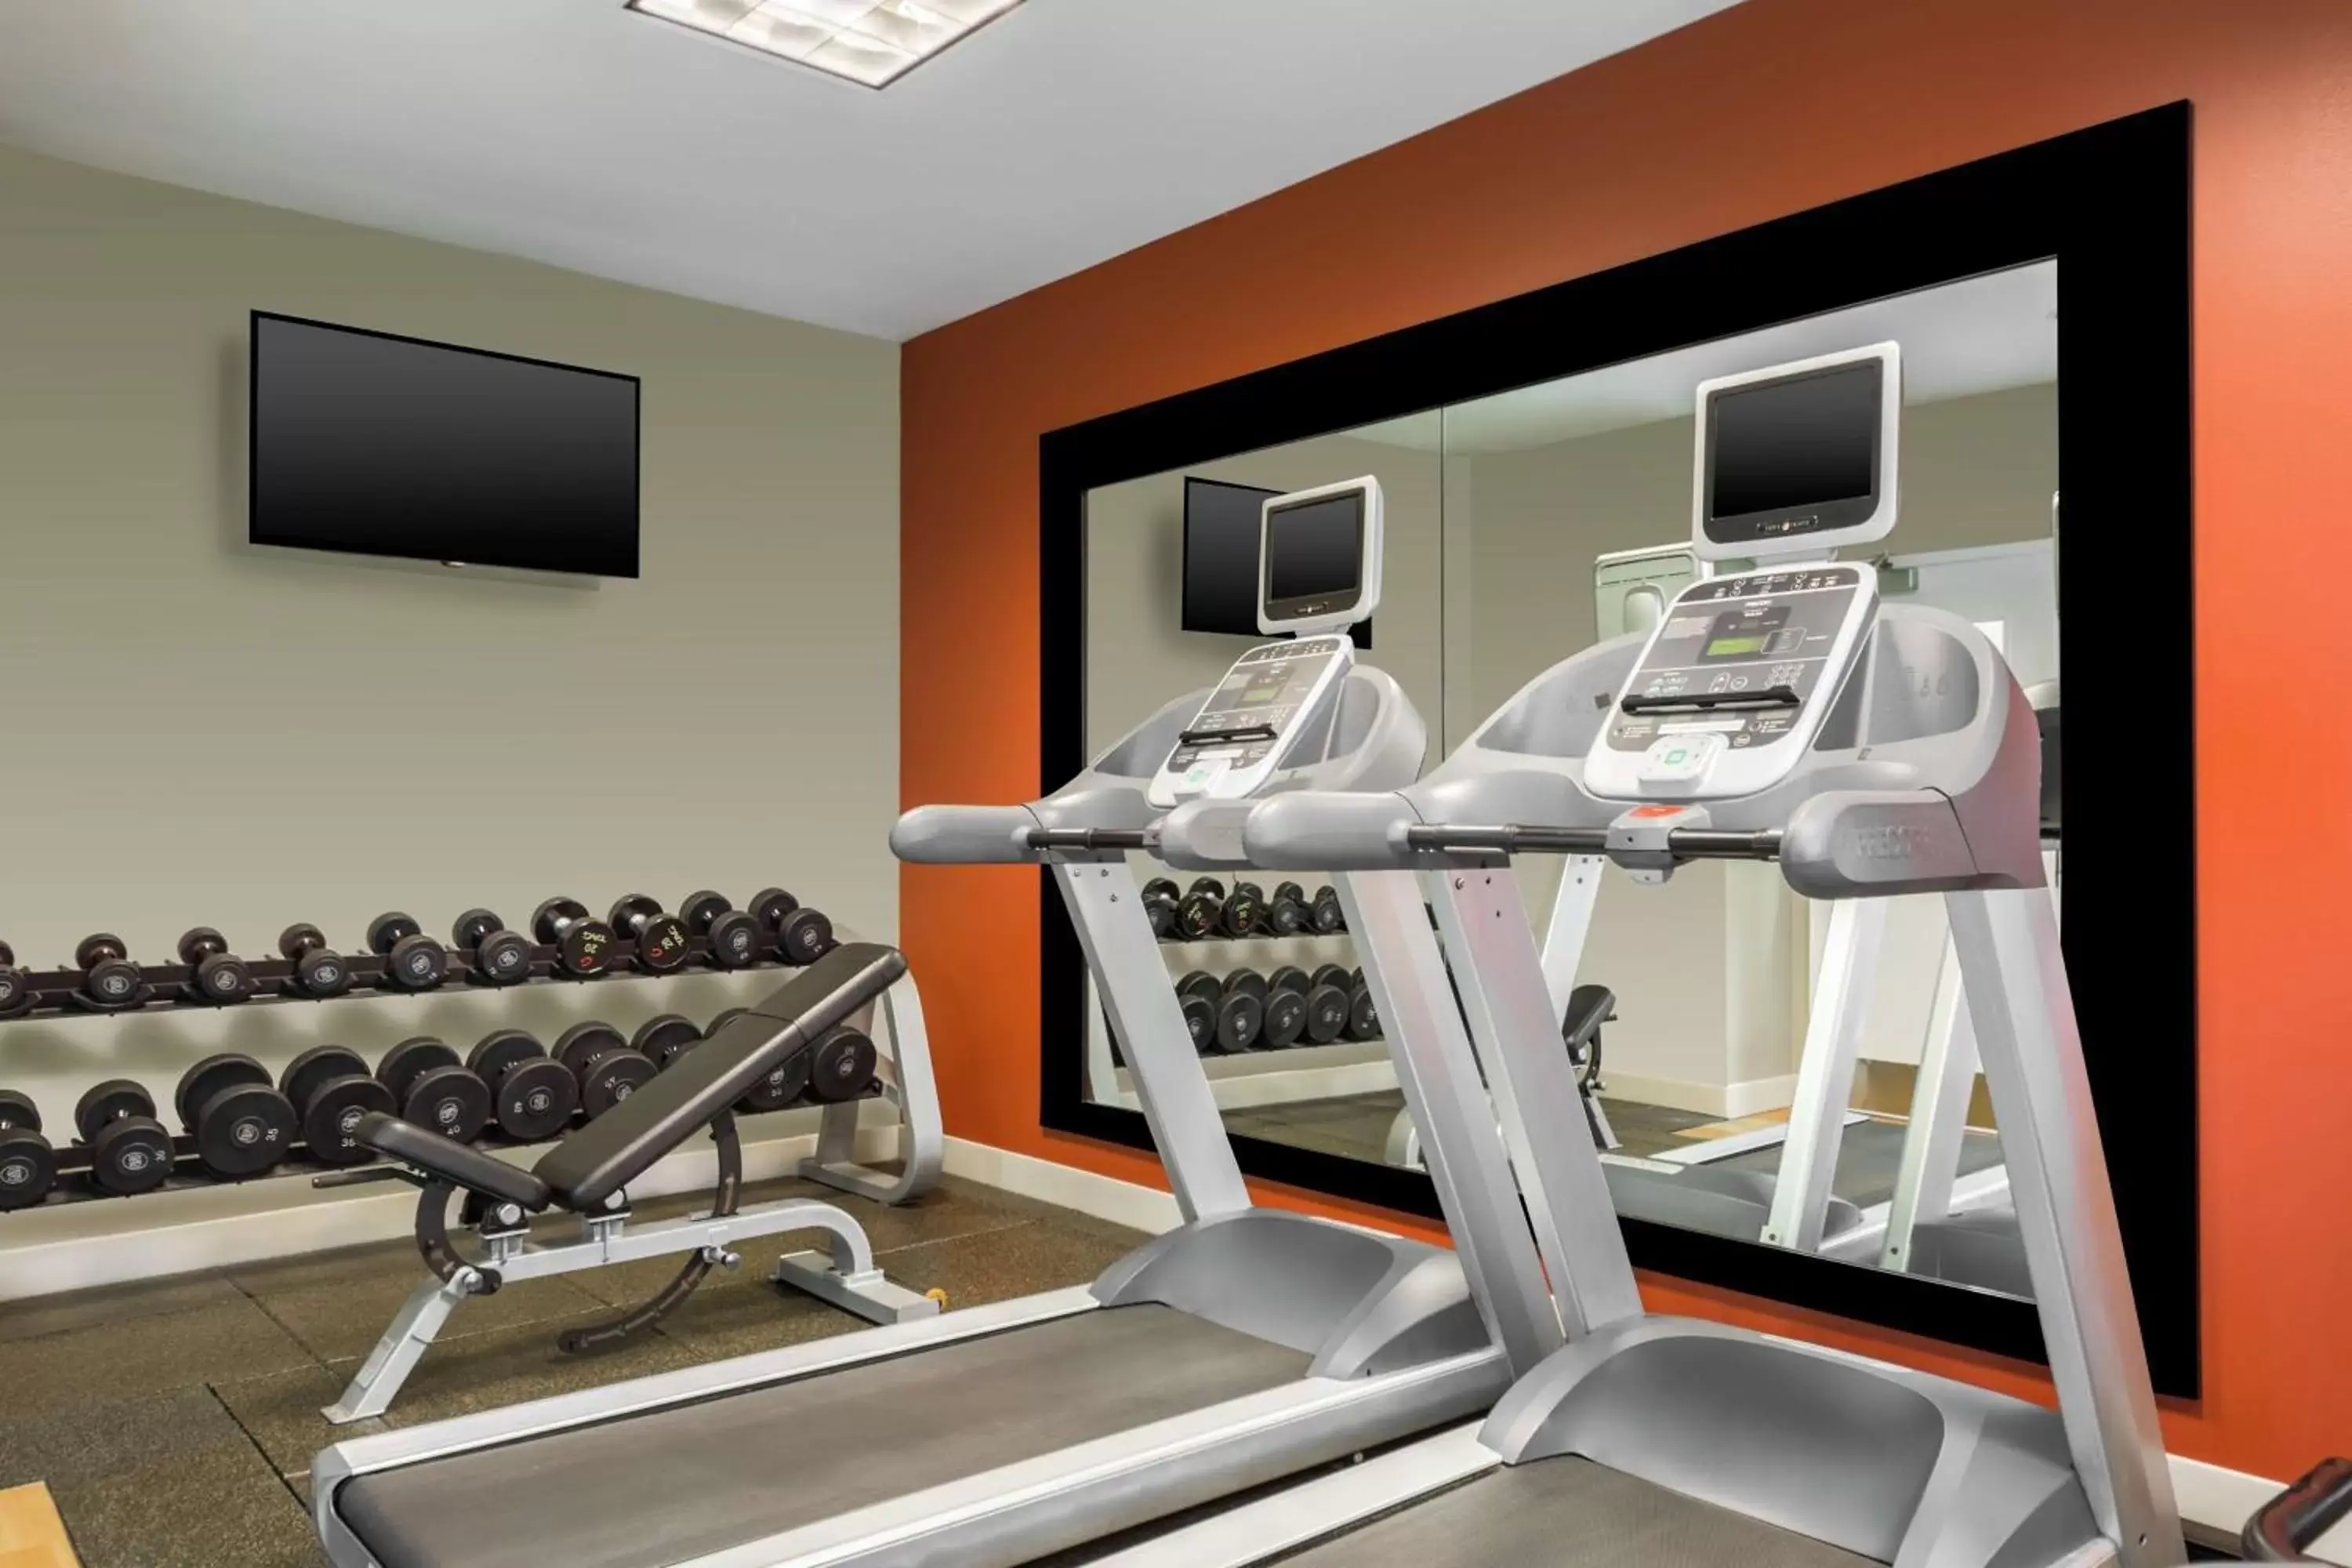 Fitness centre/facilities, Fitness Center/Facilities in Hilton Garden Inn Independence